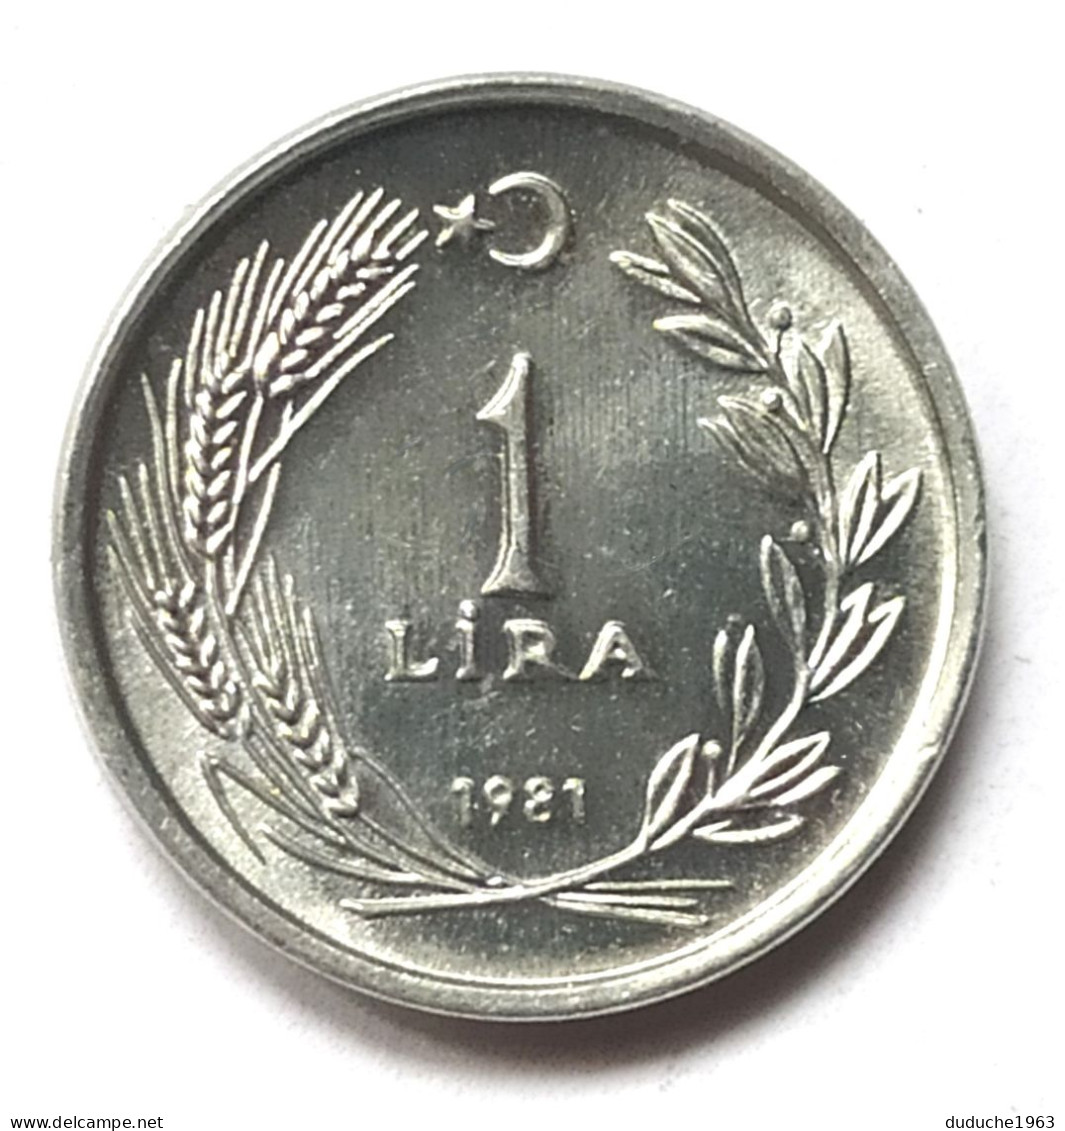 Turquie - 1 Lira 1981 - Turkey